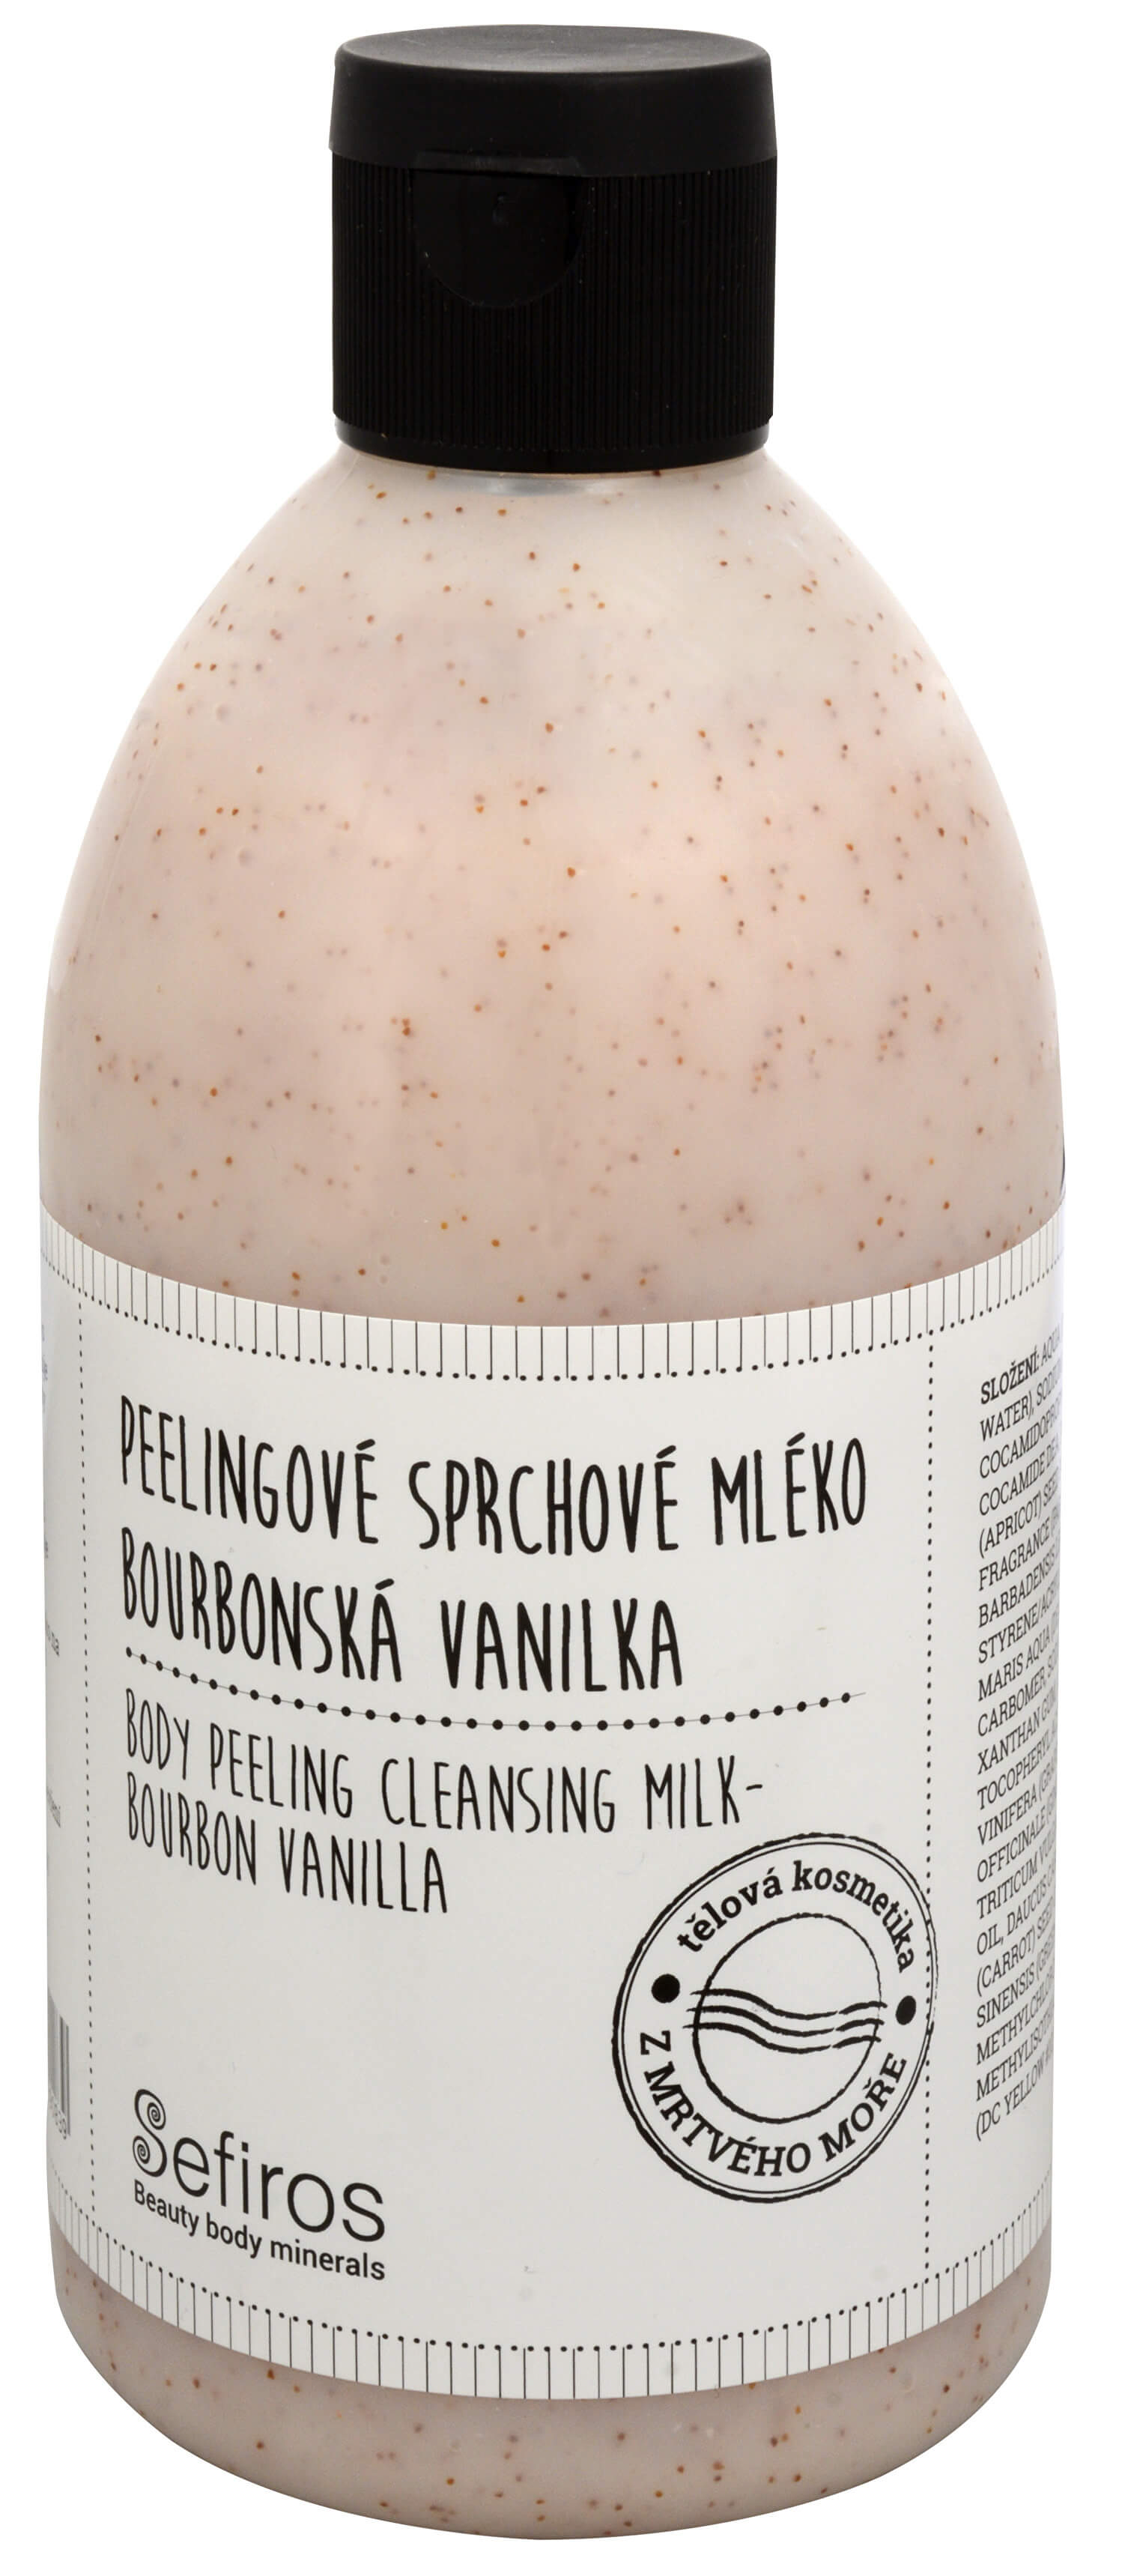 Sefiros Peelingové sprchové mléko Bourbonská vanilka (Body Peeling Cleansing Milk) 500 ml